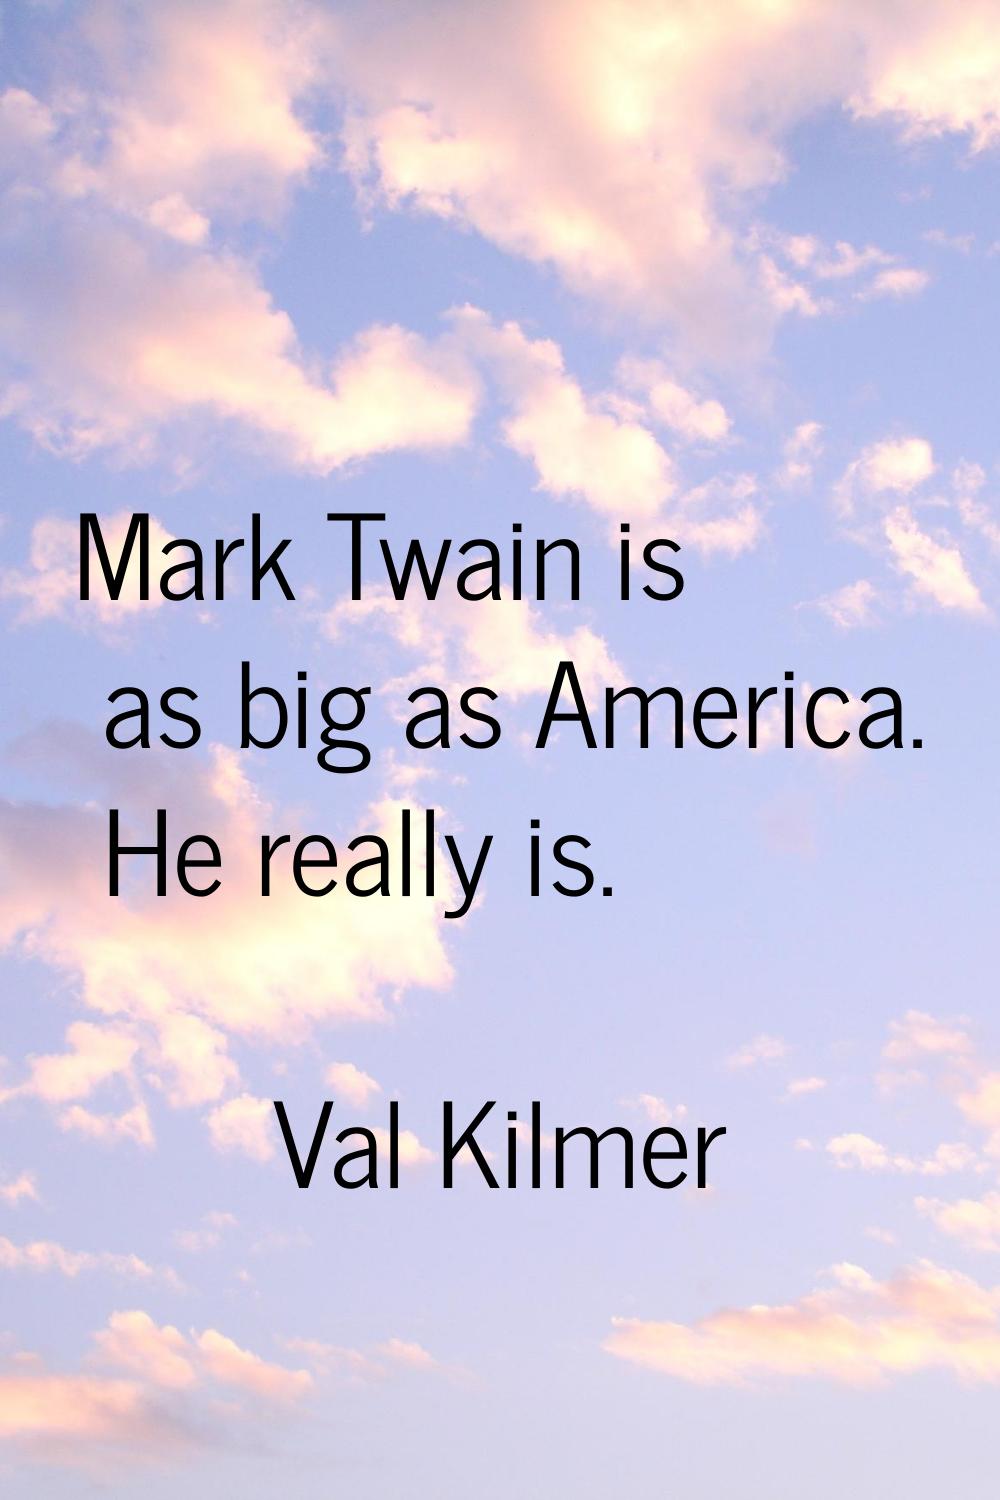 Mark Twain is as big as America. He really is.